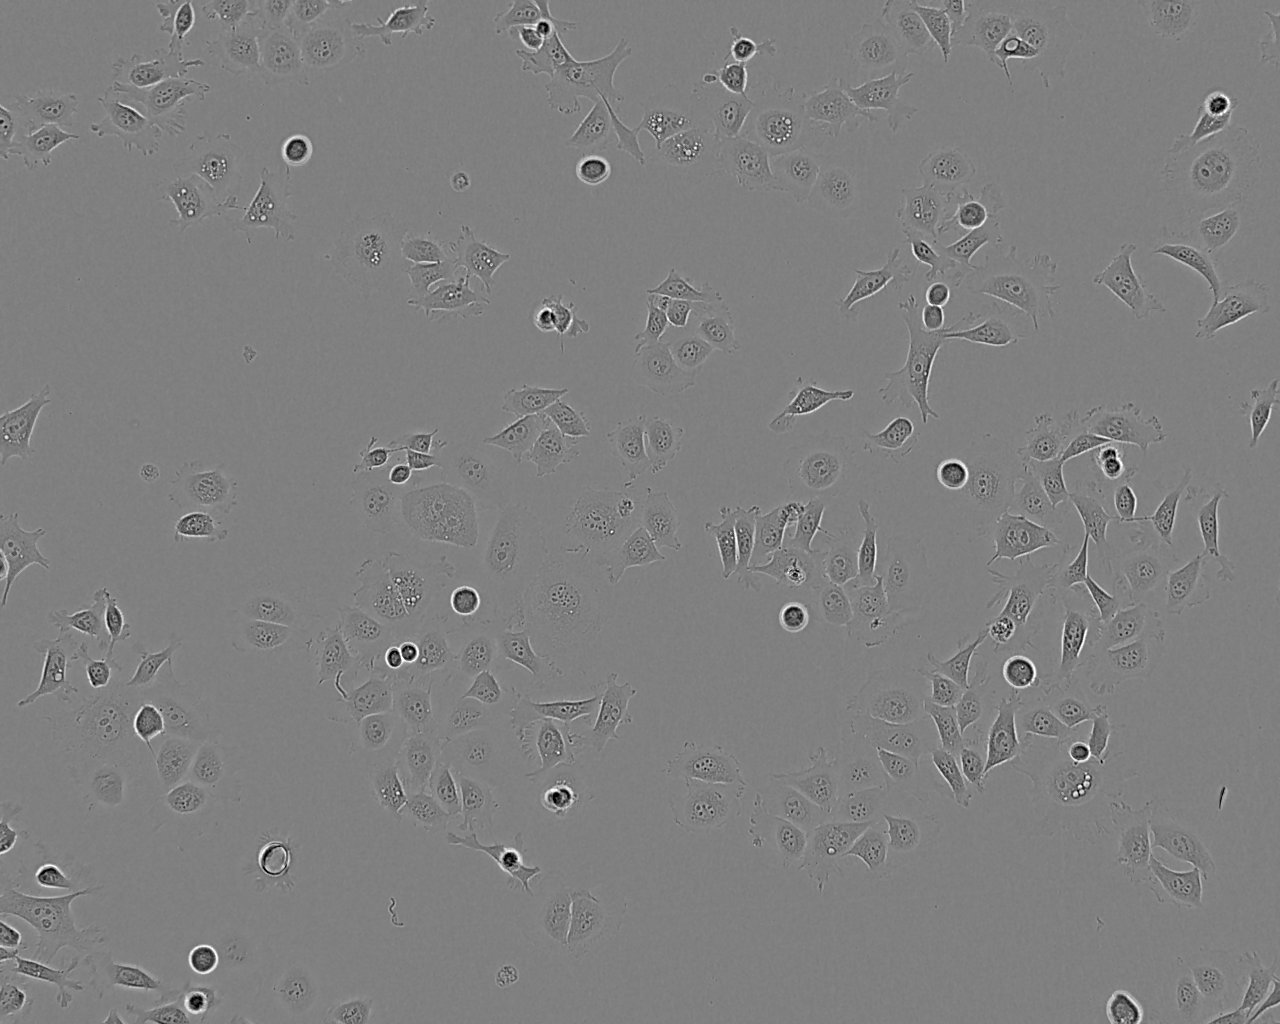 WEHI-164 Cells|小鼠纤维肉瘤可传代细胞系